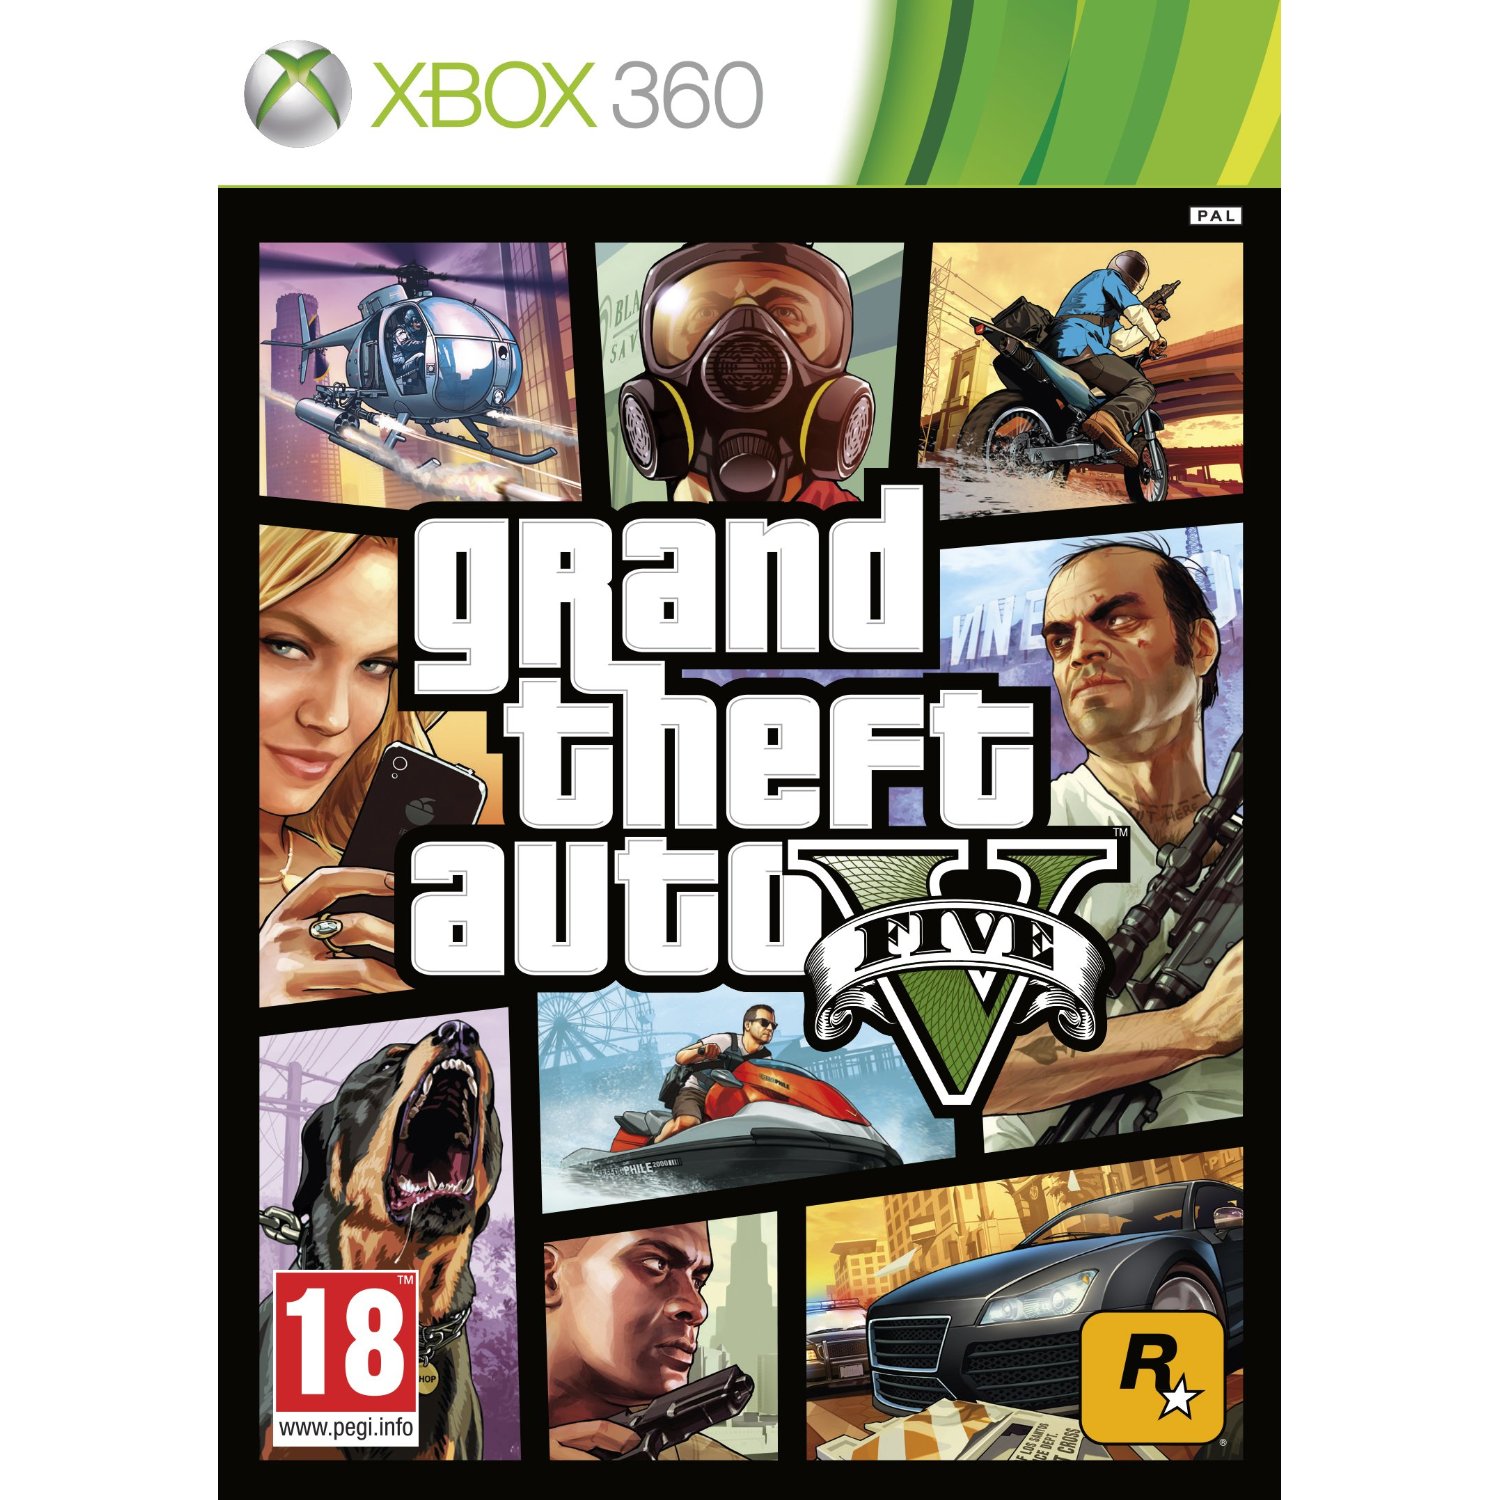 Grand Theft Auto V (GTA 5) von Rockstar